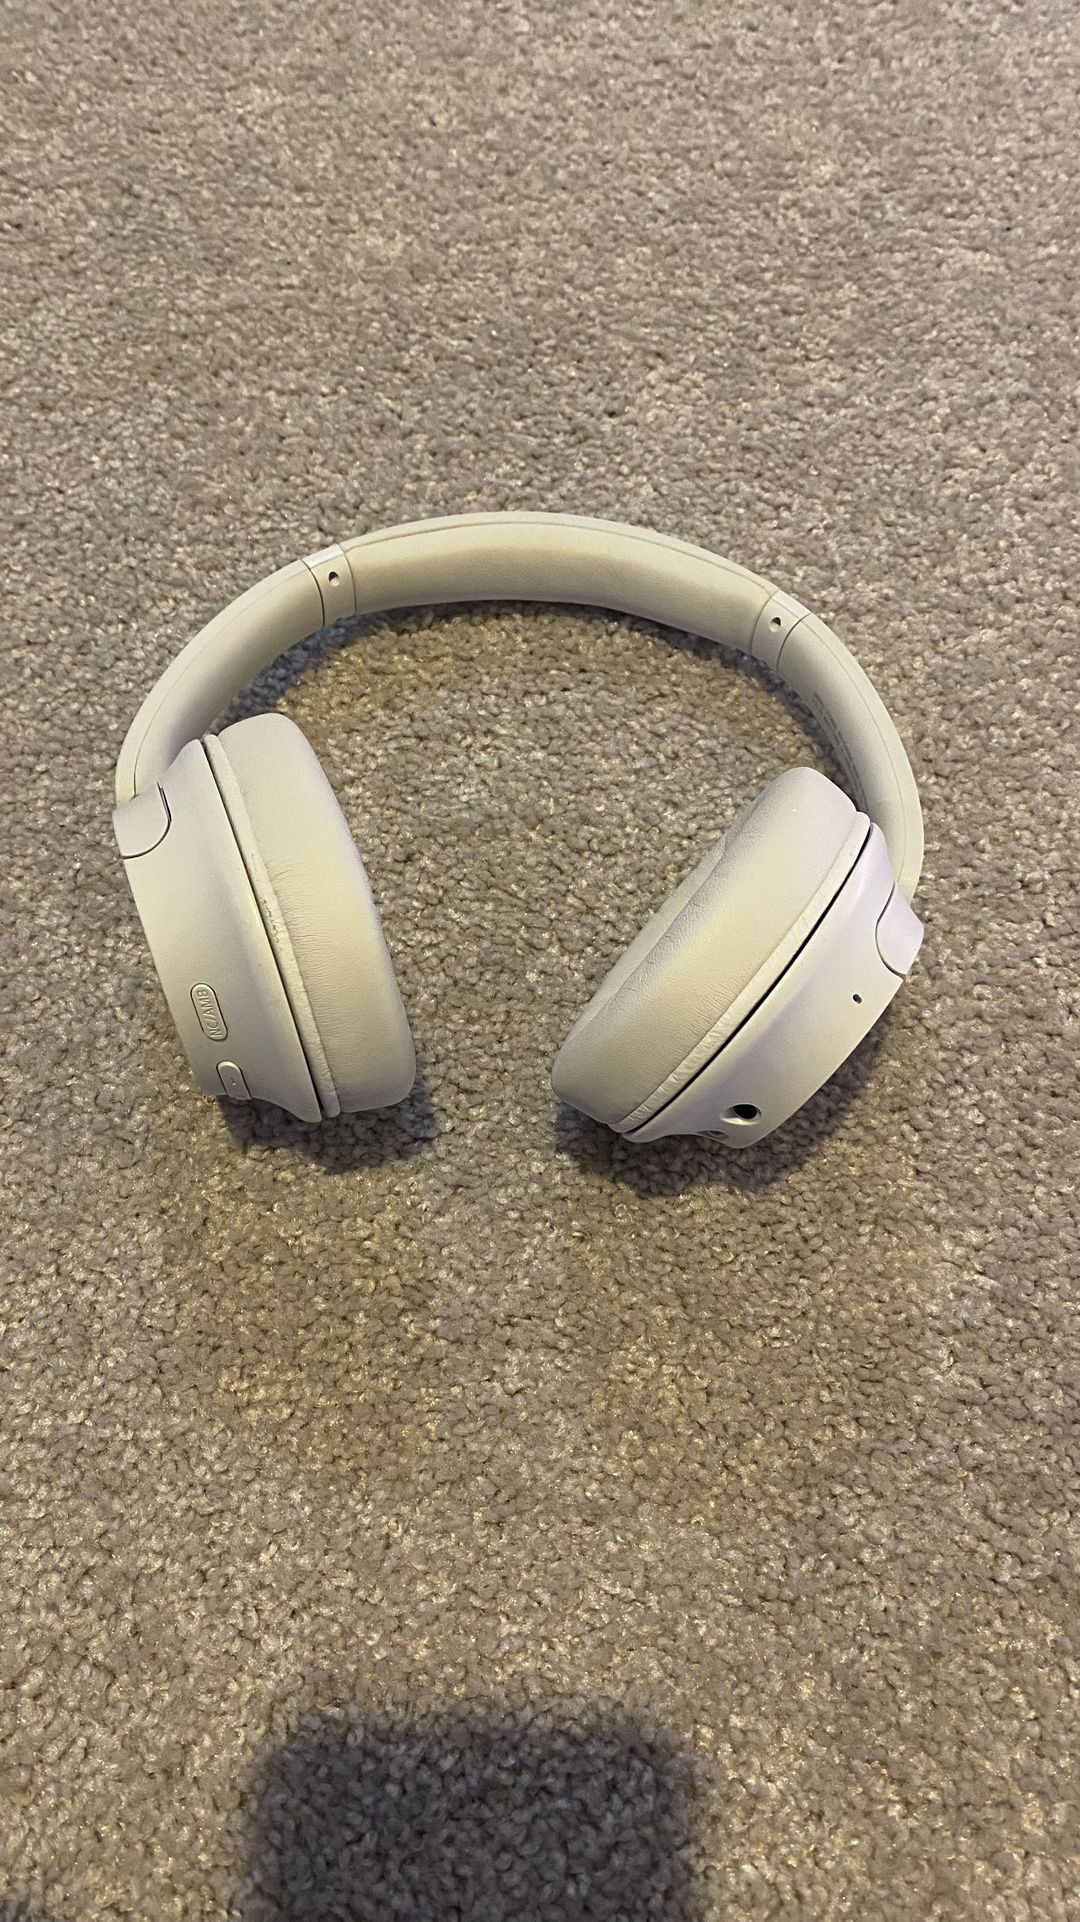 Sony WHCH720N Bluetooth Wireless Noise-Canceling Headphones